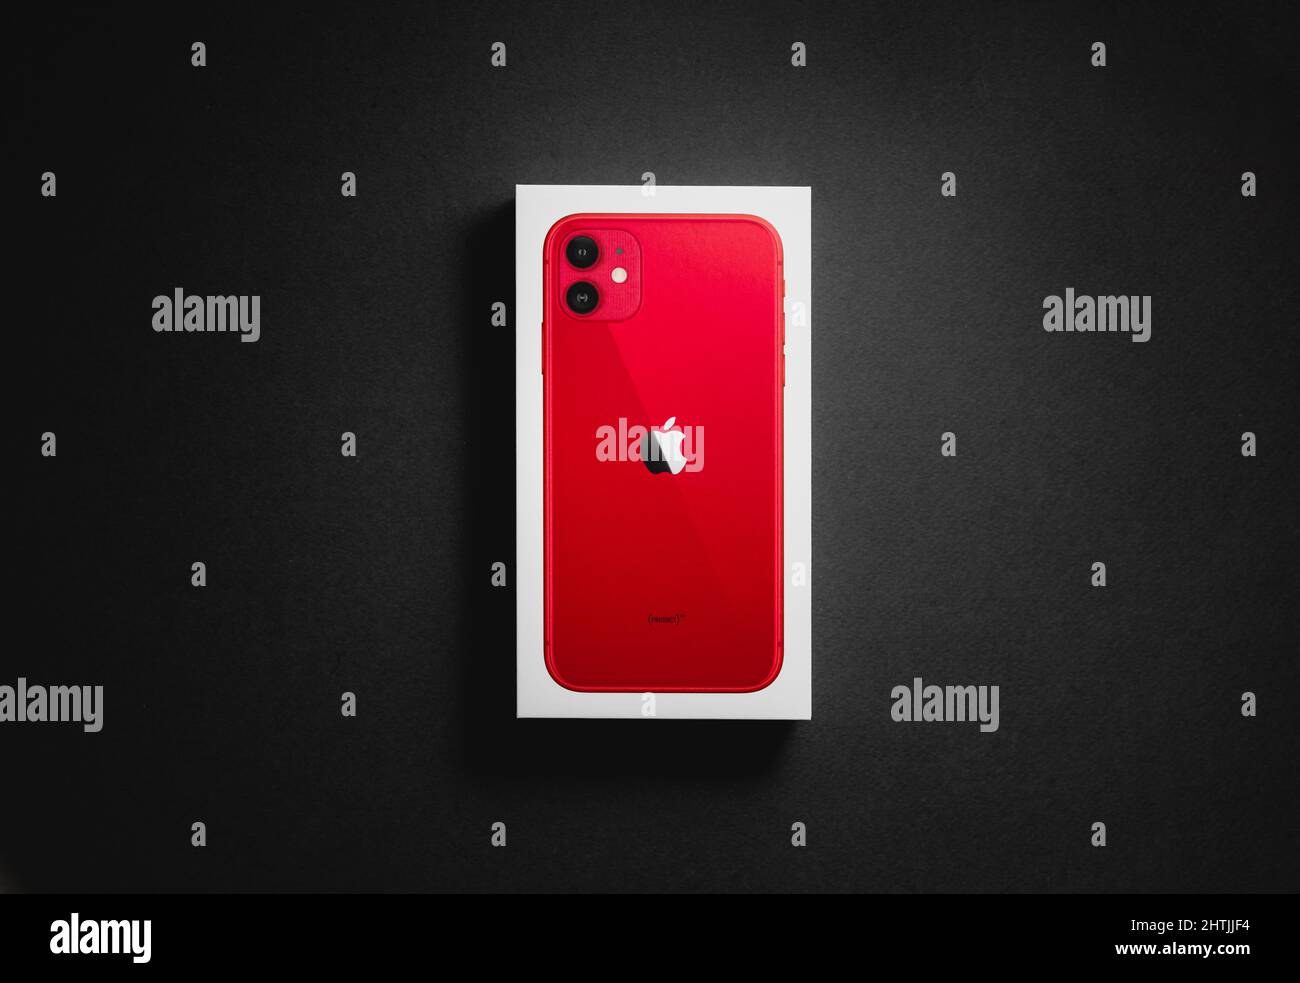 Antalya, Turkey - March 01, 2022: Red iPhone 11 box on dark background Stock Photo